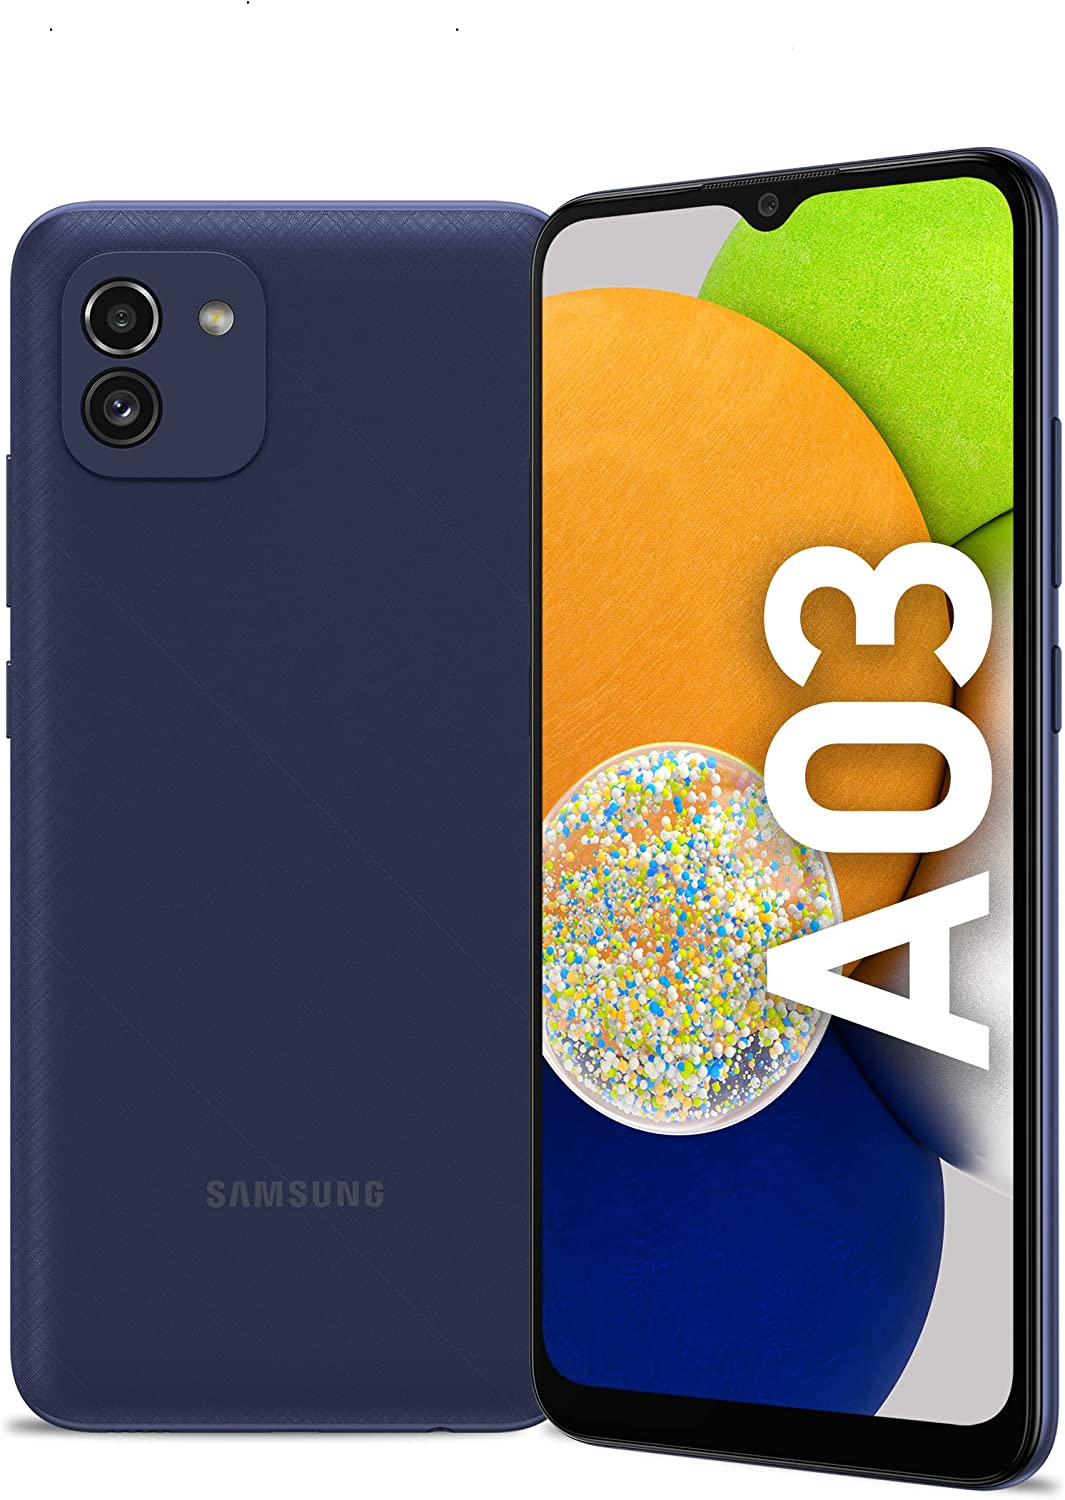 Samsung Galaxy A03 LTE Android Smartphone, 64GB, 4GB RAM, Dual Sim Mobile Phone, Blue (UAE Version)